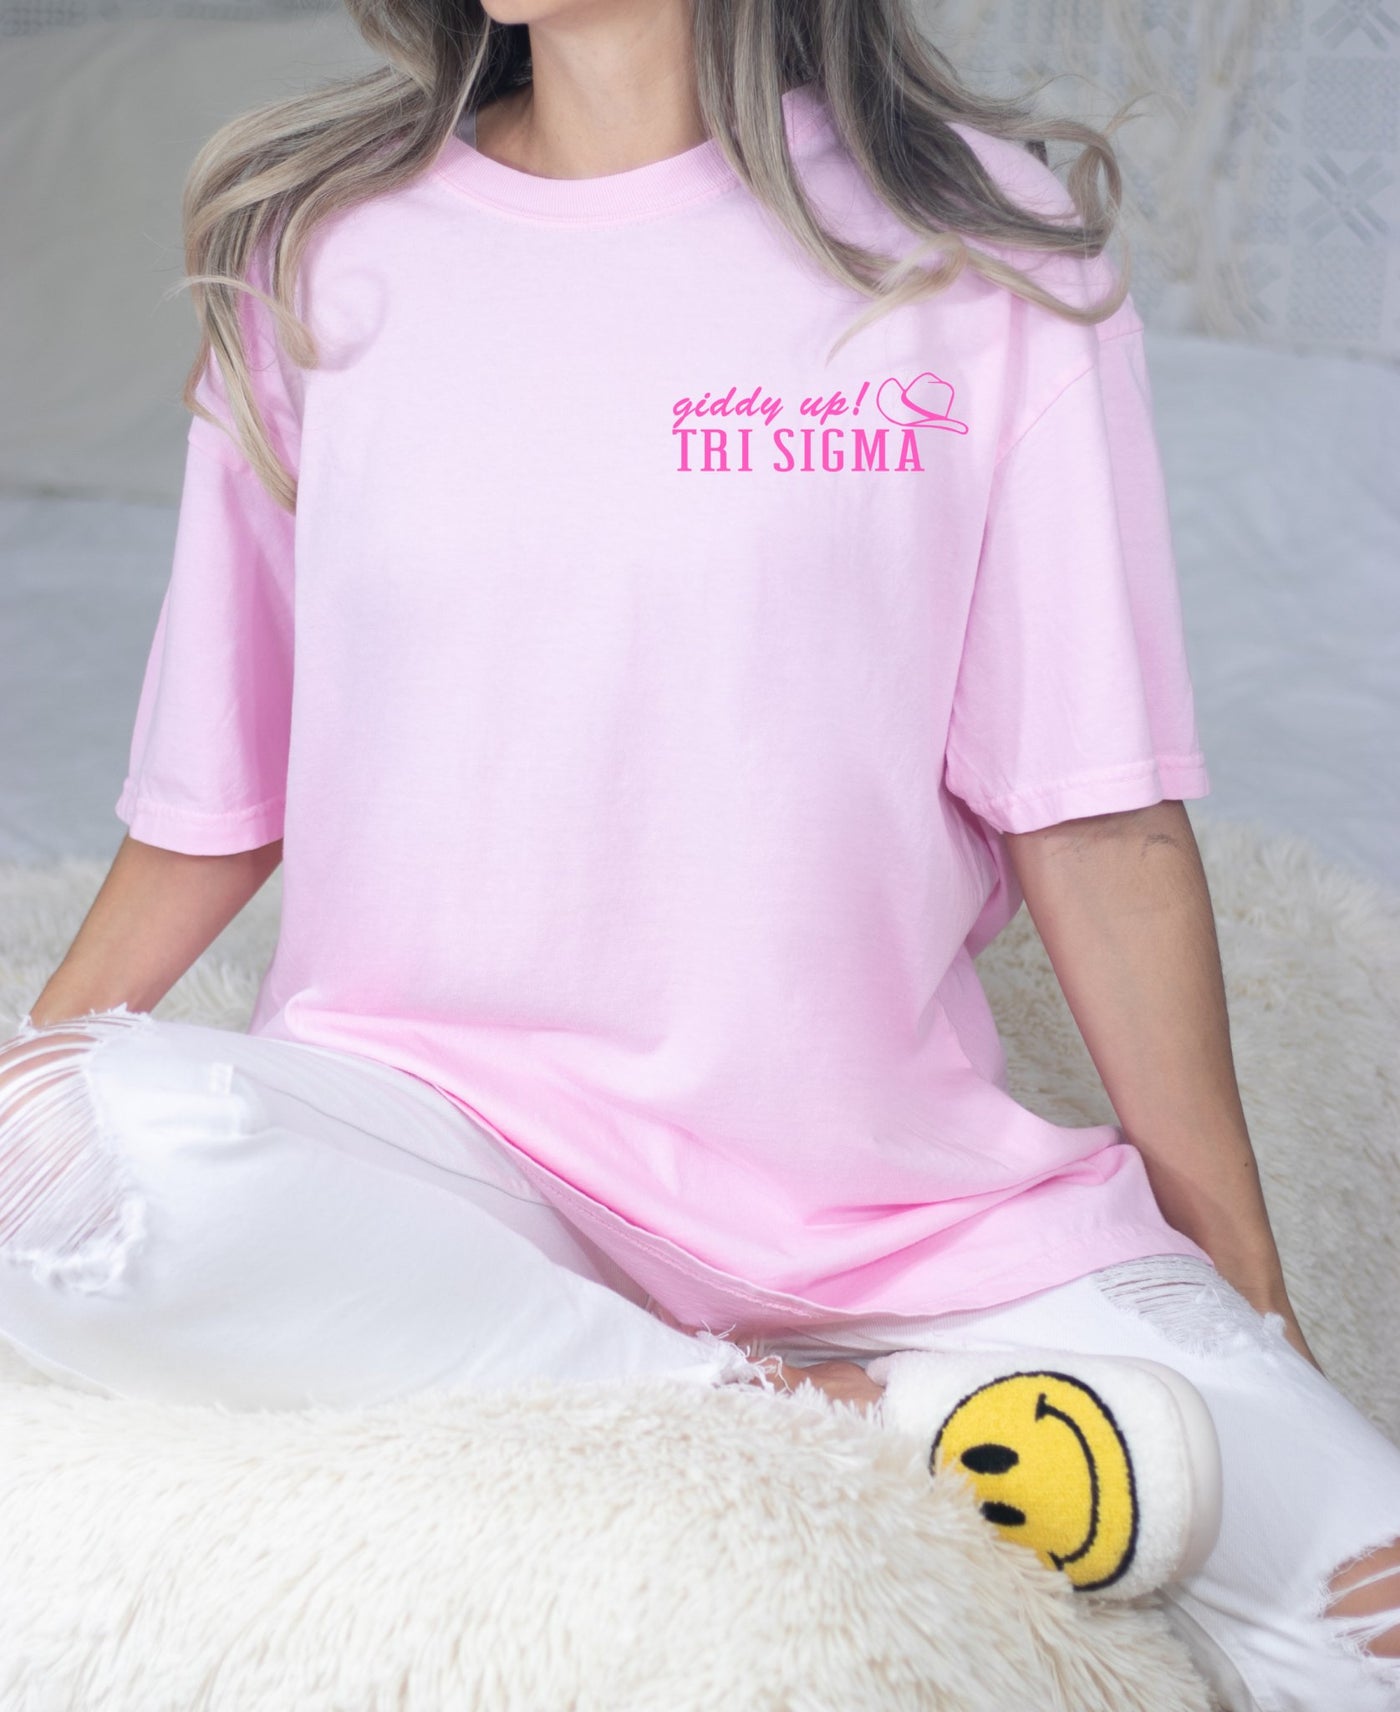 Sigma Sigma Sigma Country Western Pink Sorority T-shirt